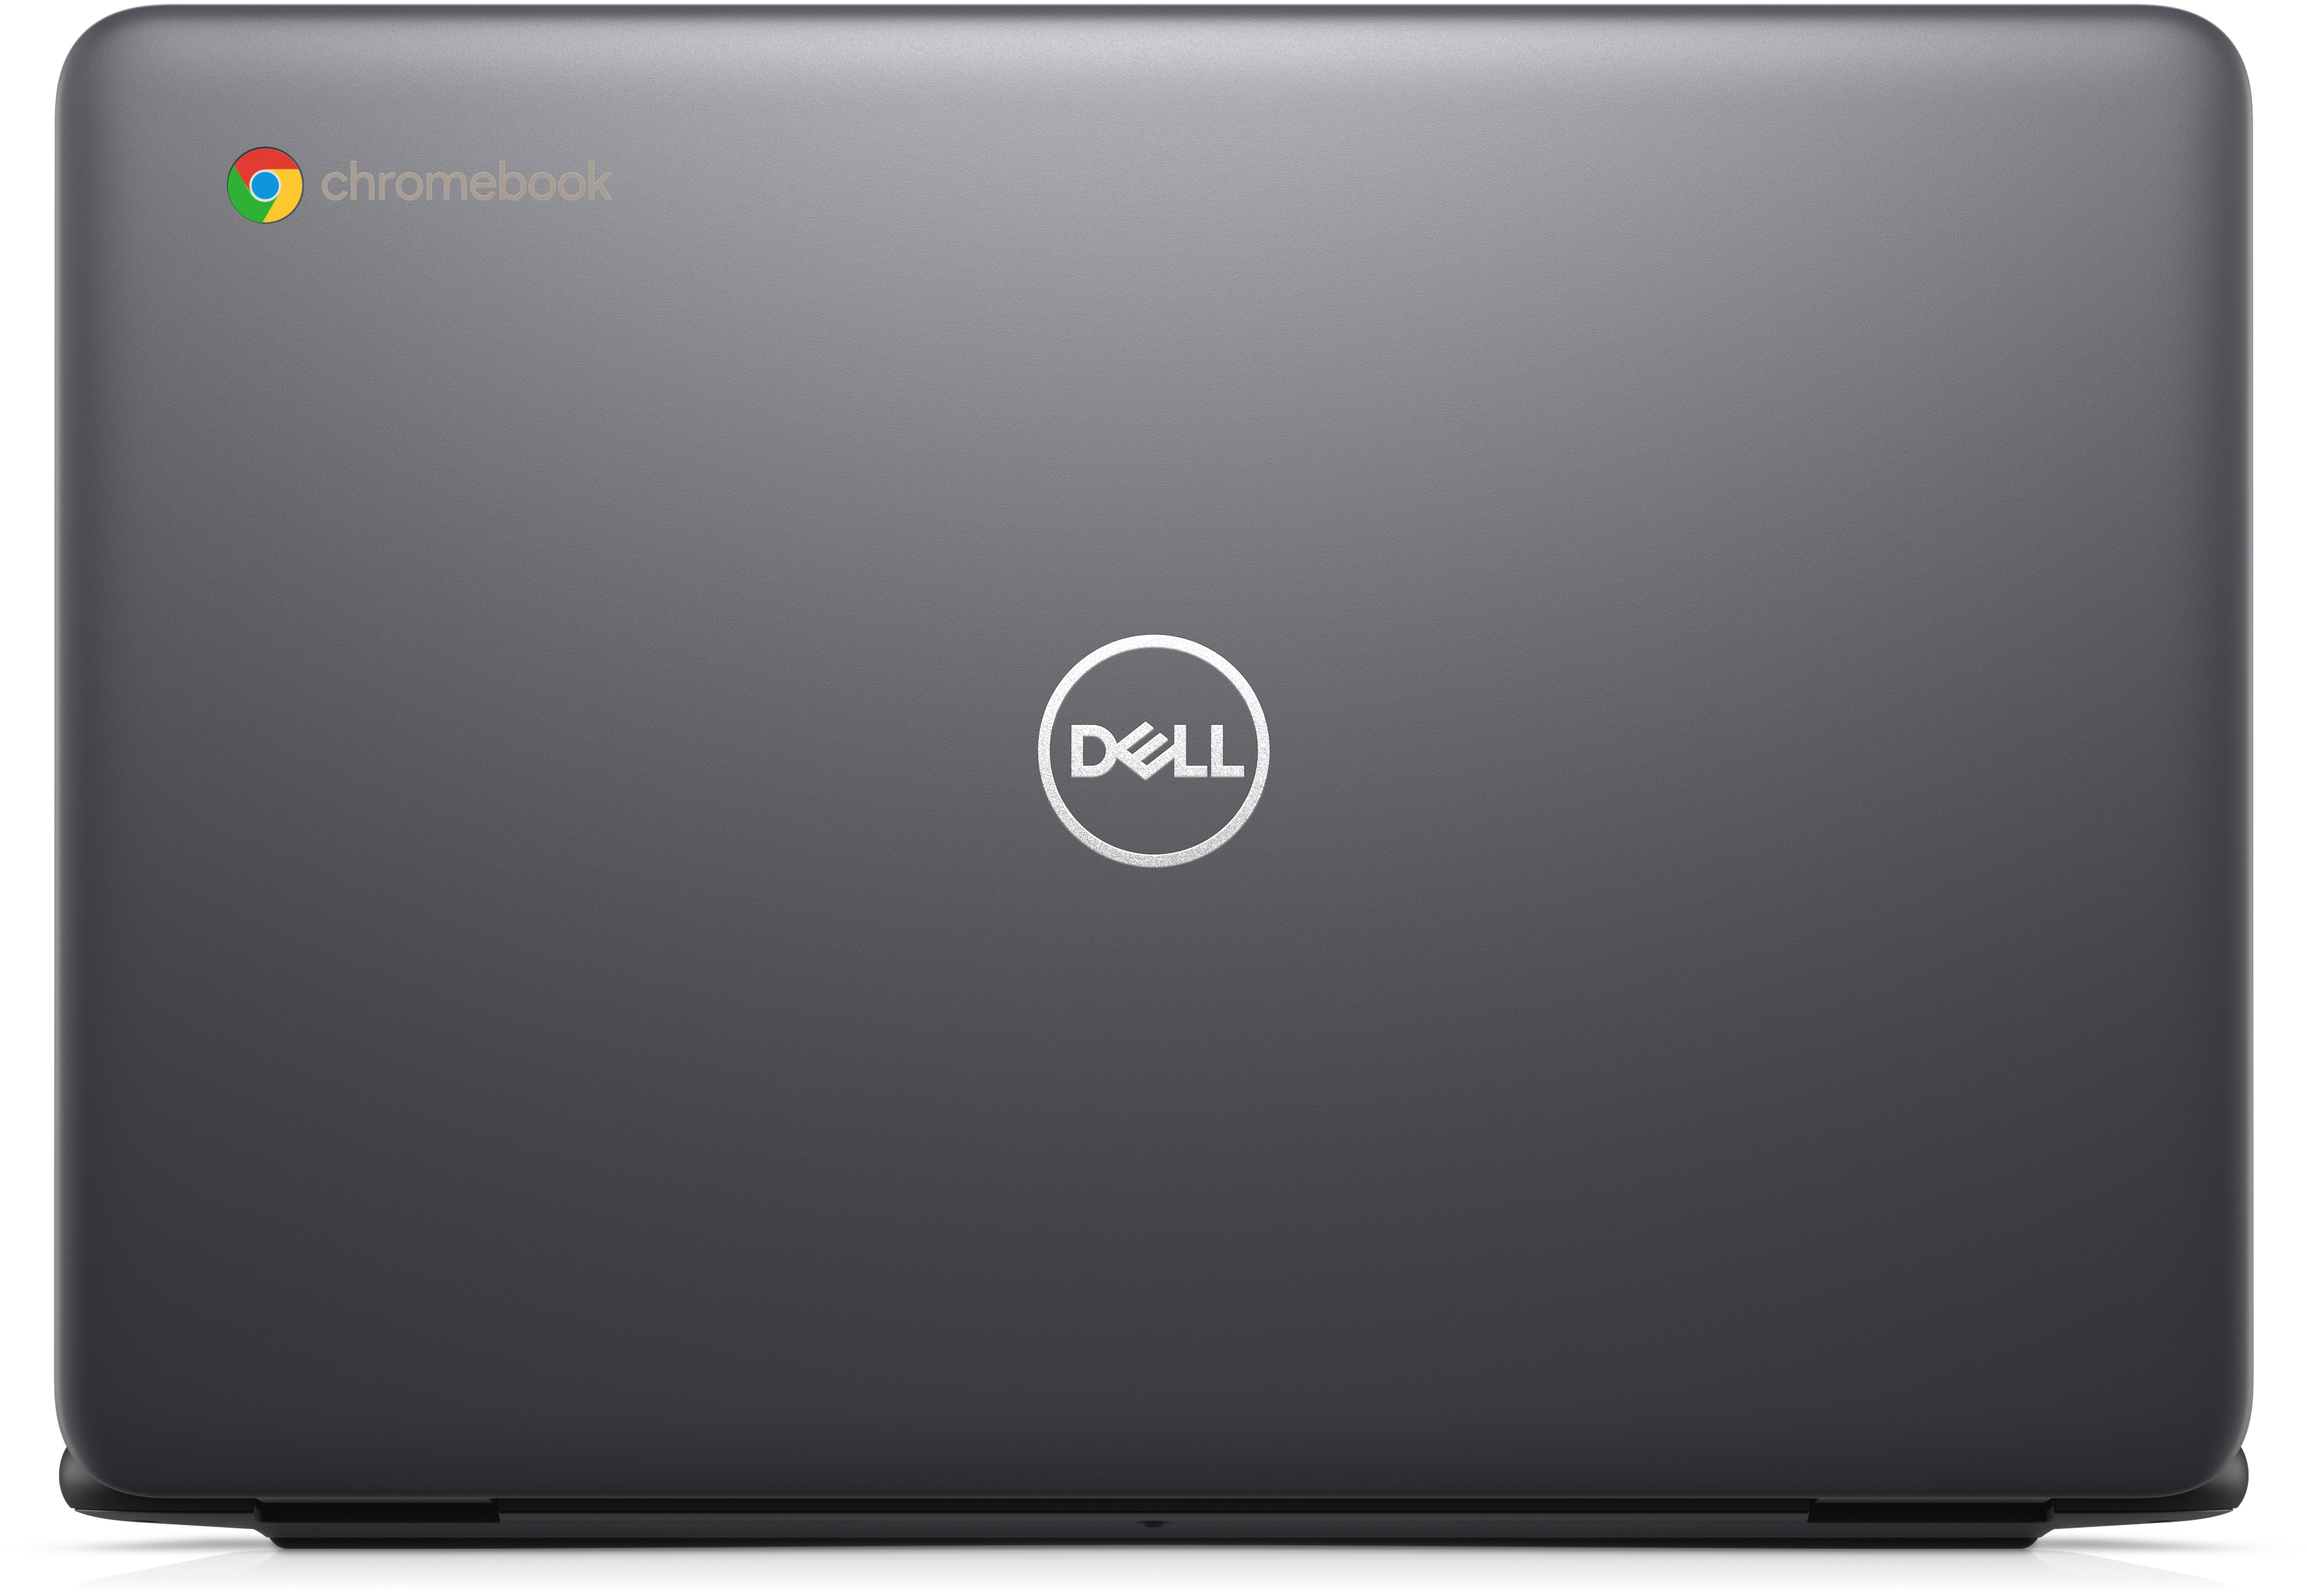 2021 Dell 29,5 cm convertible 2 en 1 pantalla táctil Chromebook, proce